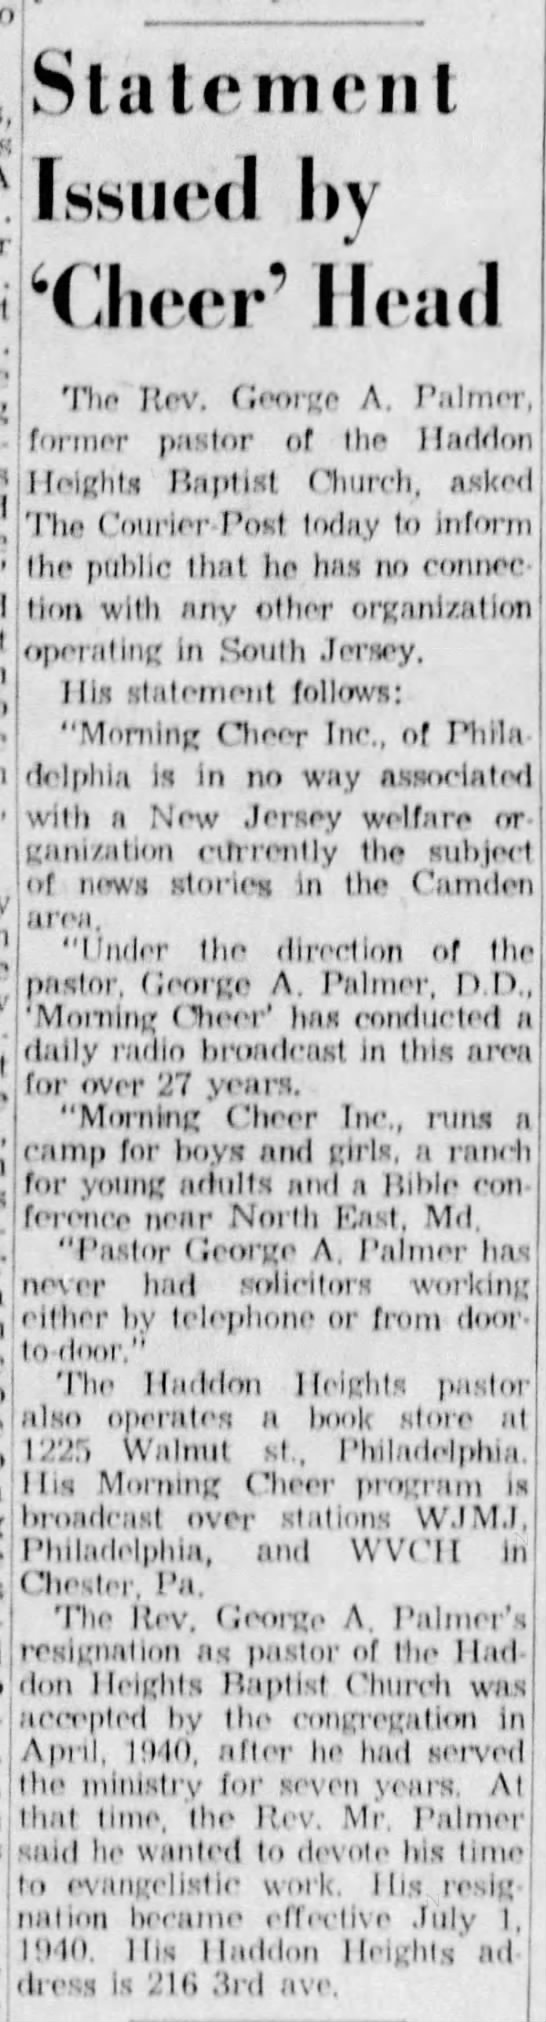 Courier-Post, Camden NJ (7/1/1959) - 